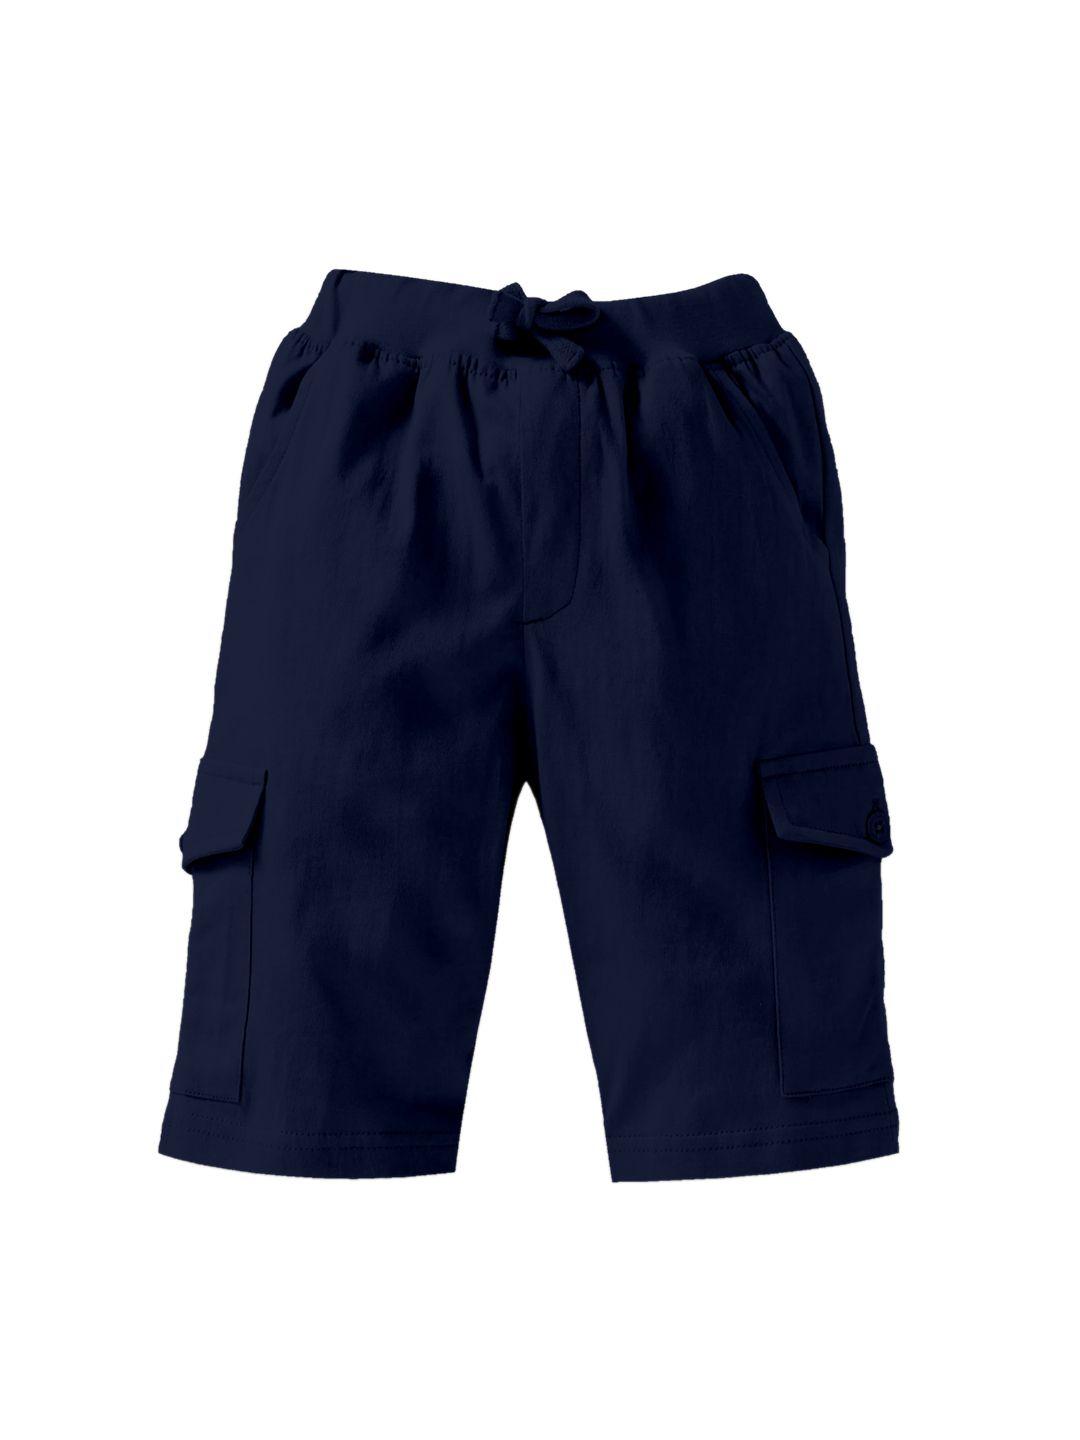 kiddopanti-boys-navy-blue-cotton-shorts